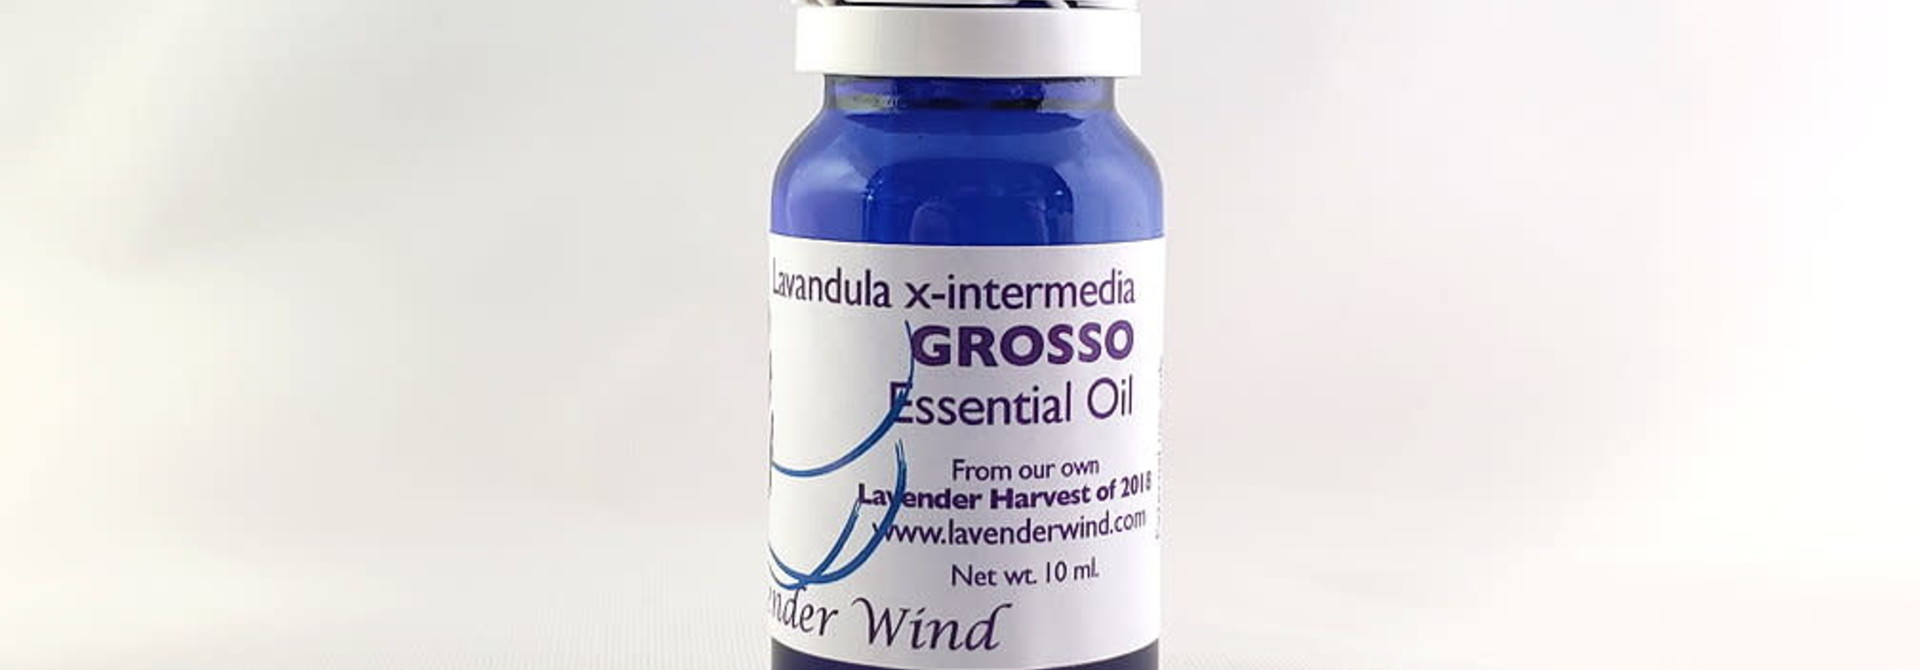 Grosso Essential Oil 10 ml